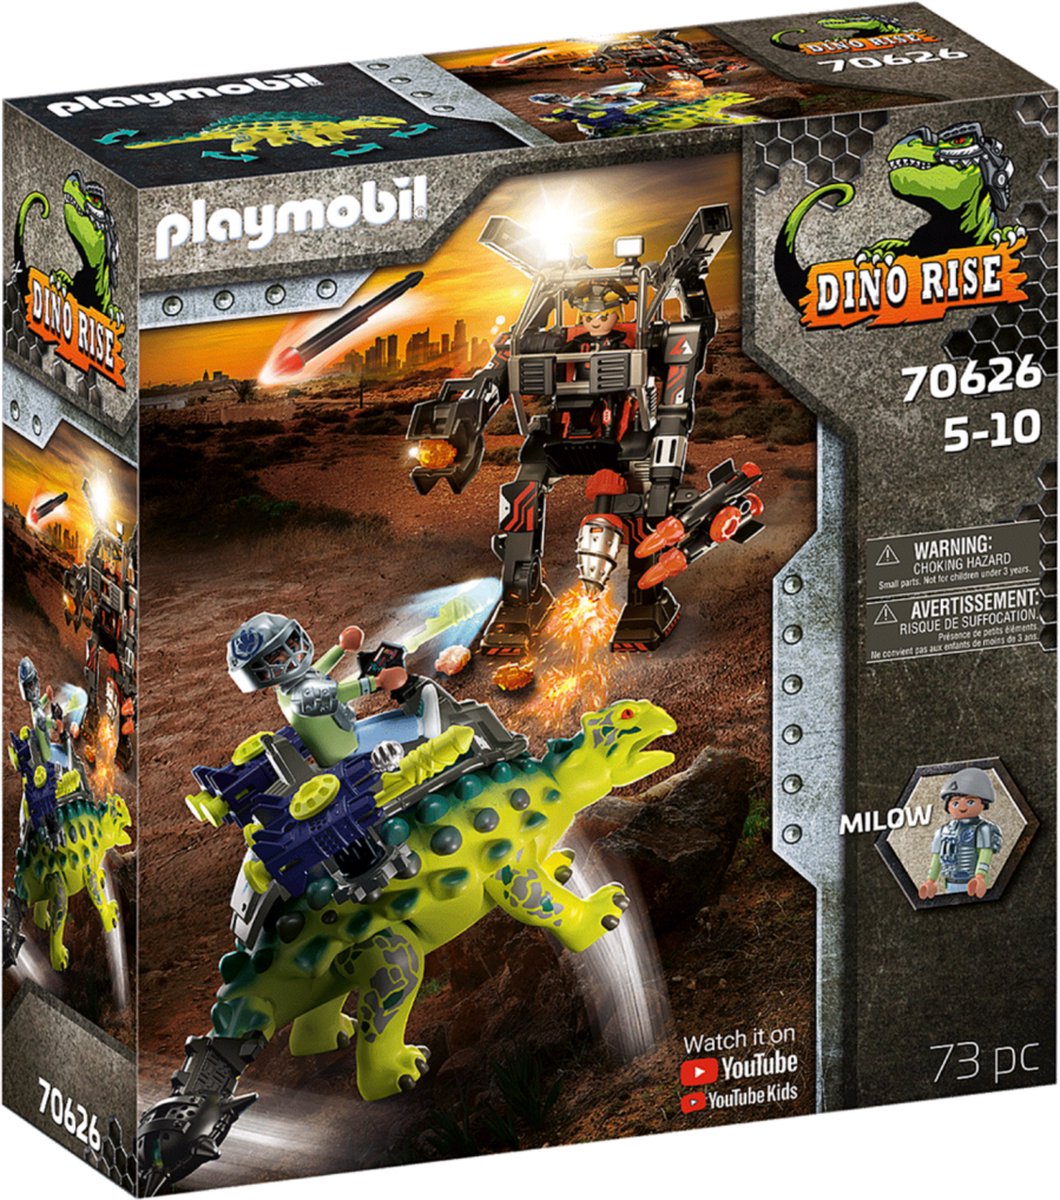 Playmobil saichania: vechtersbazen Dino Rise (70626) - Verde